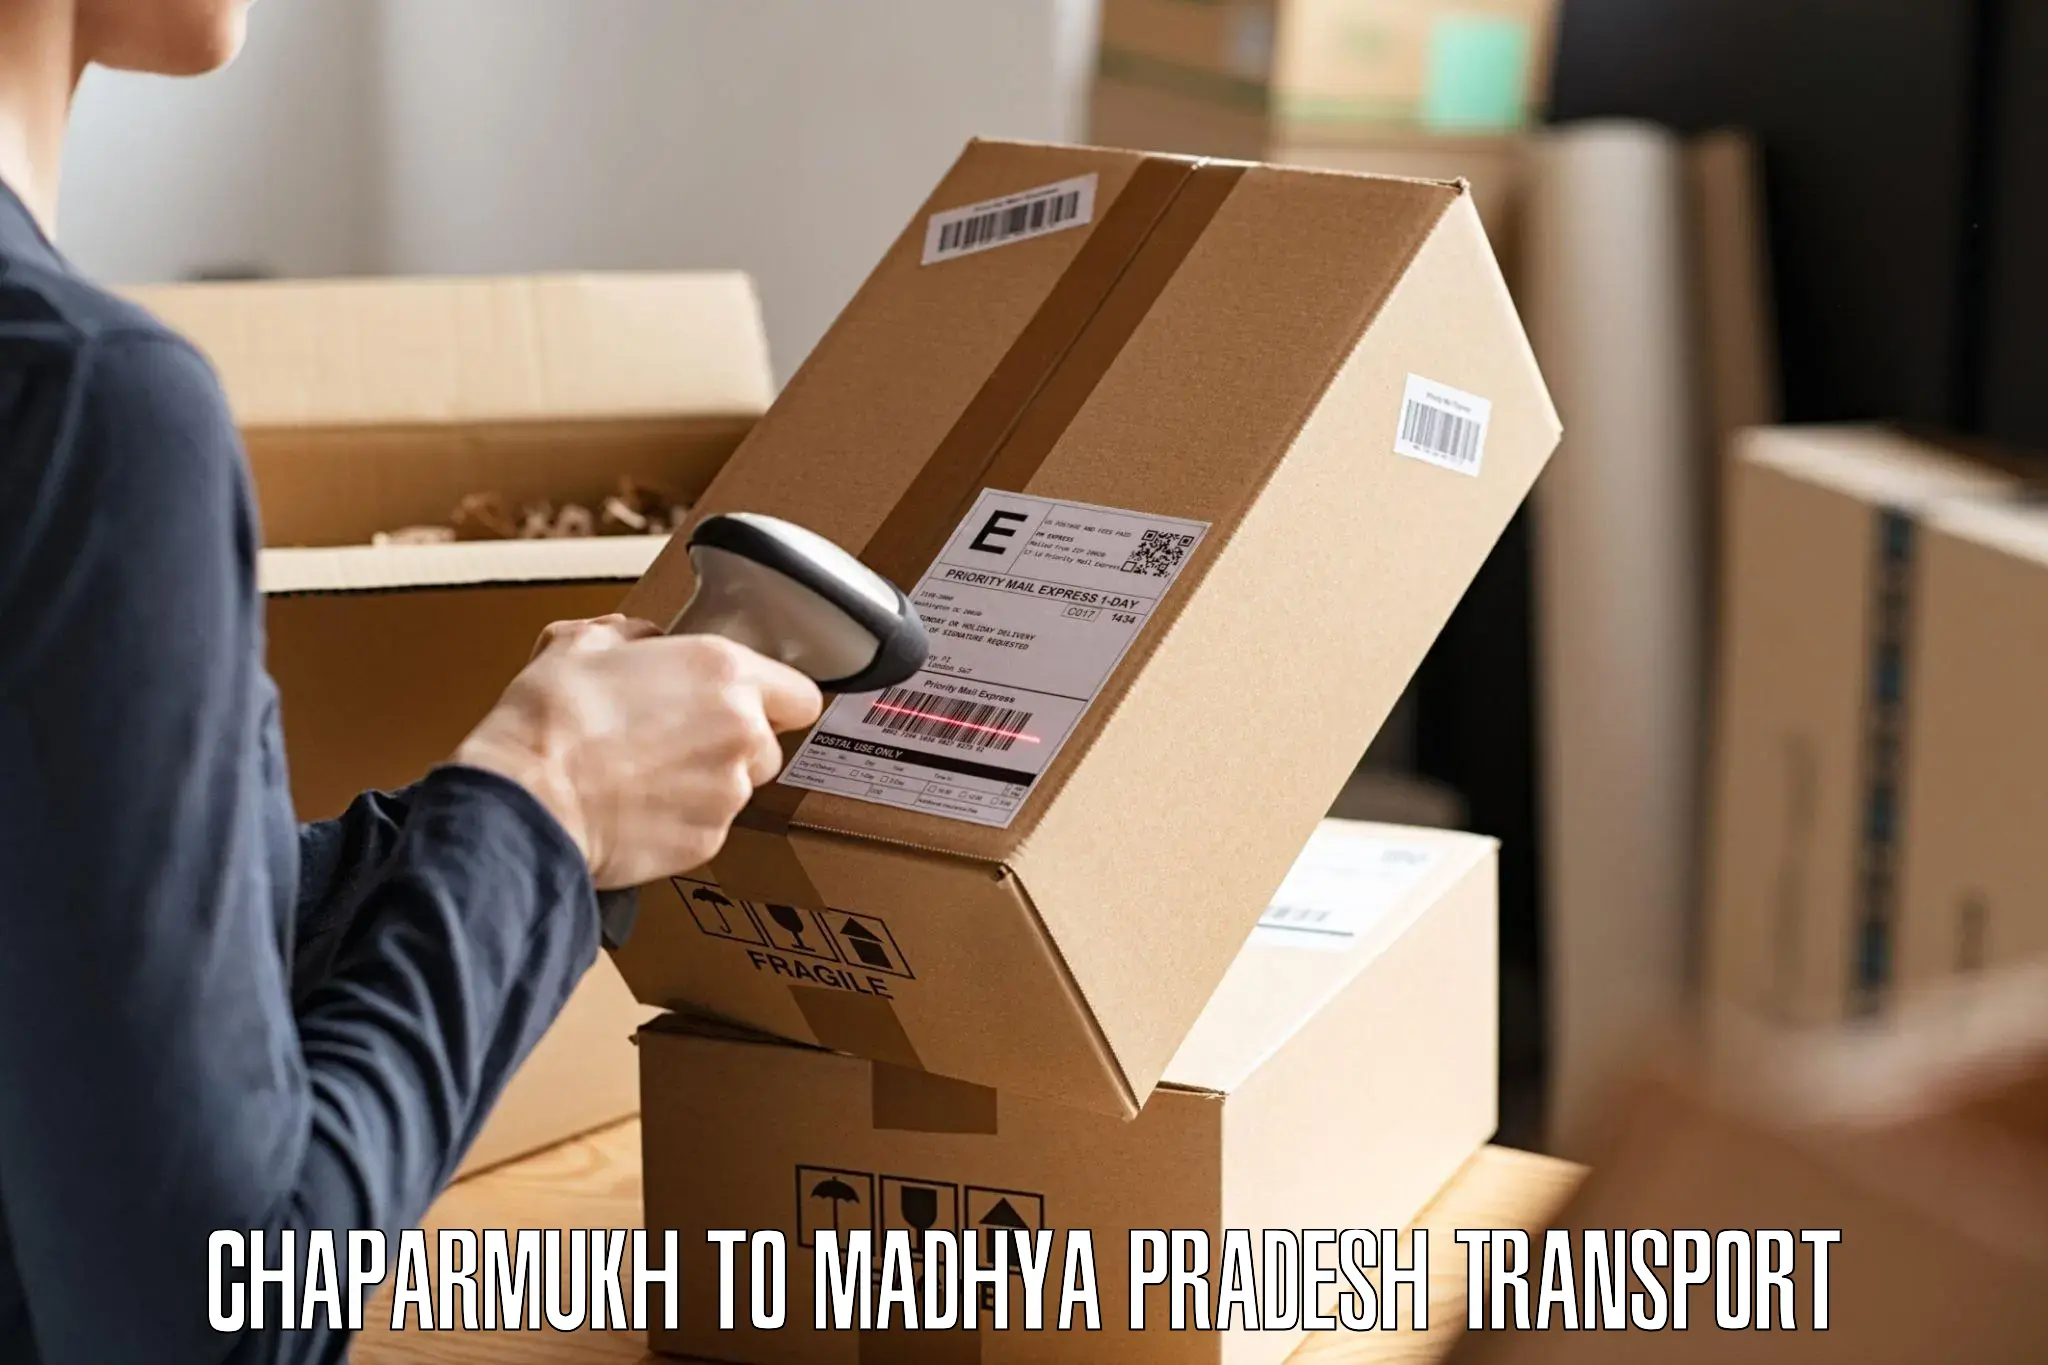 Daily parcel service transport Chaparmukh to Ashoknagar